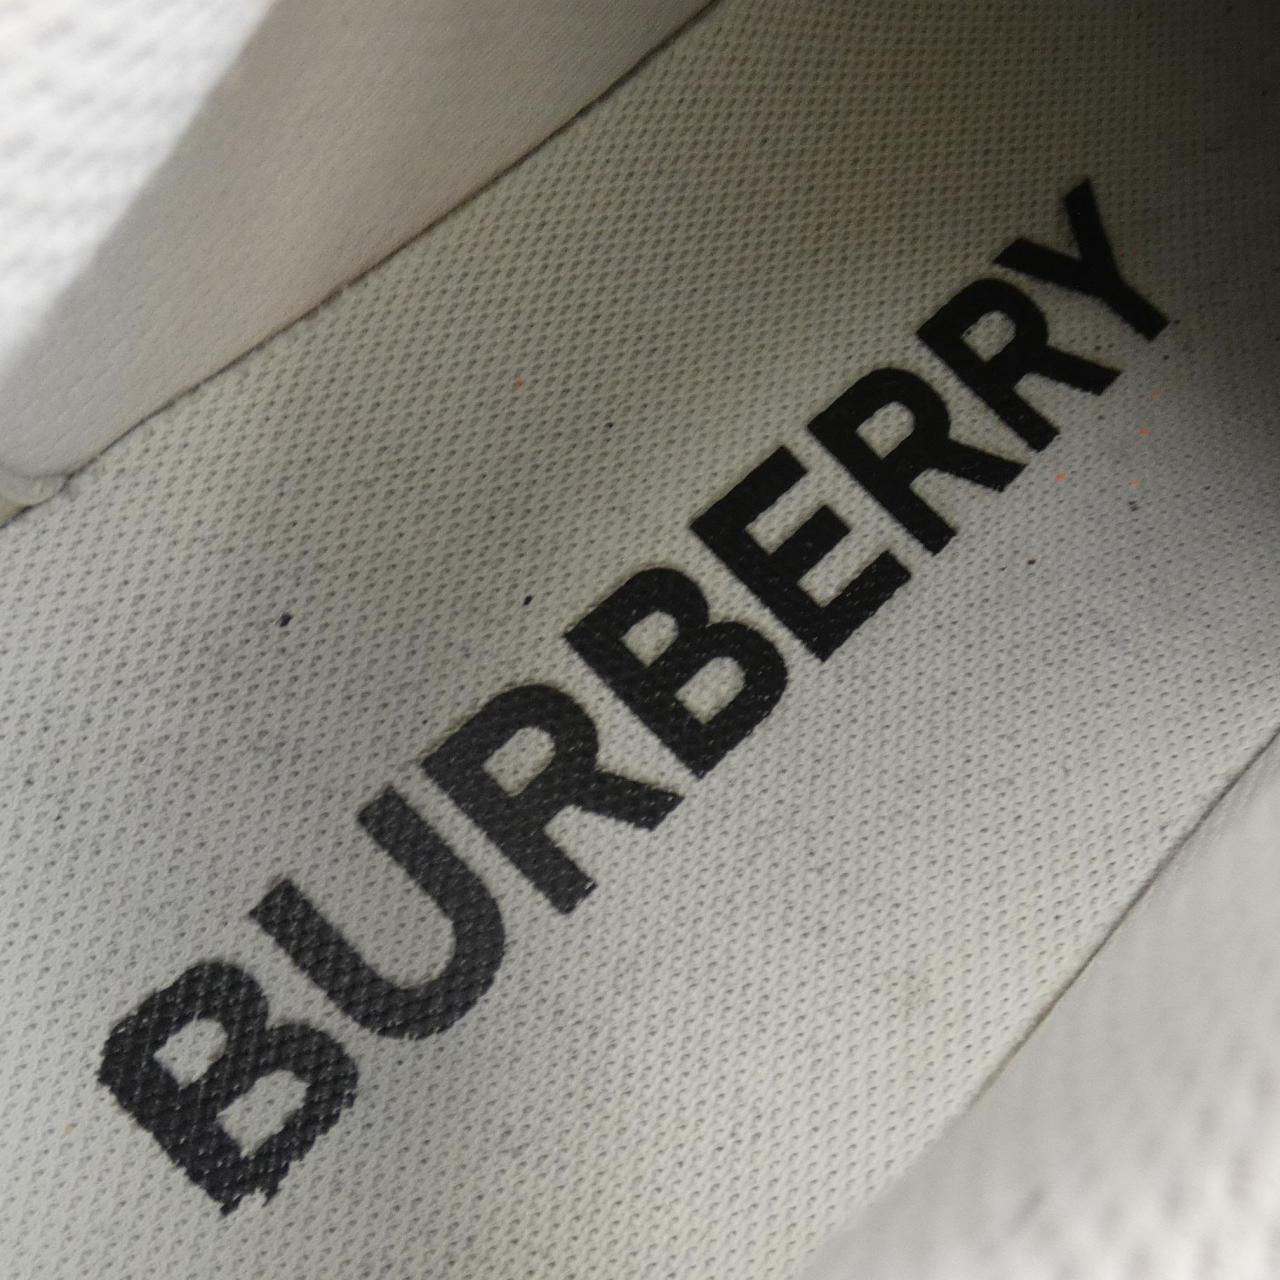 BURBERRY巴宝莉运动鞋